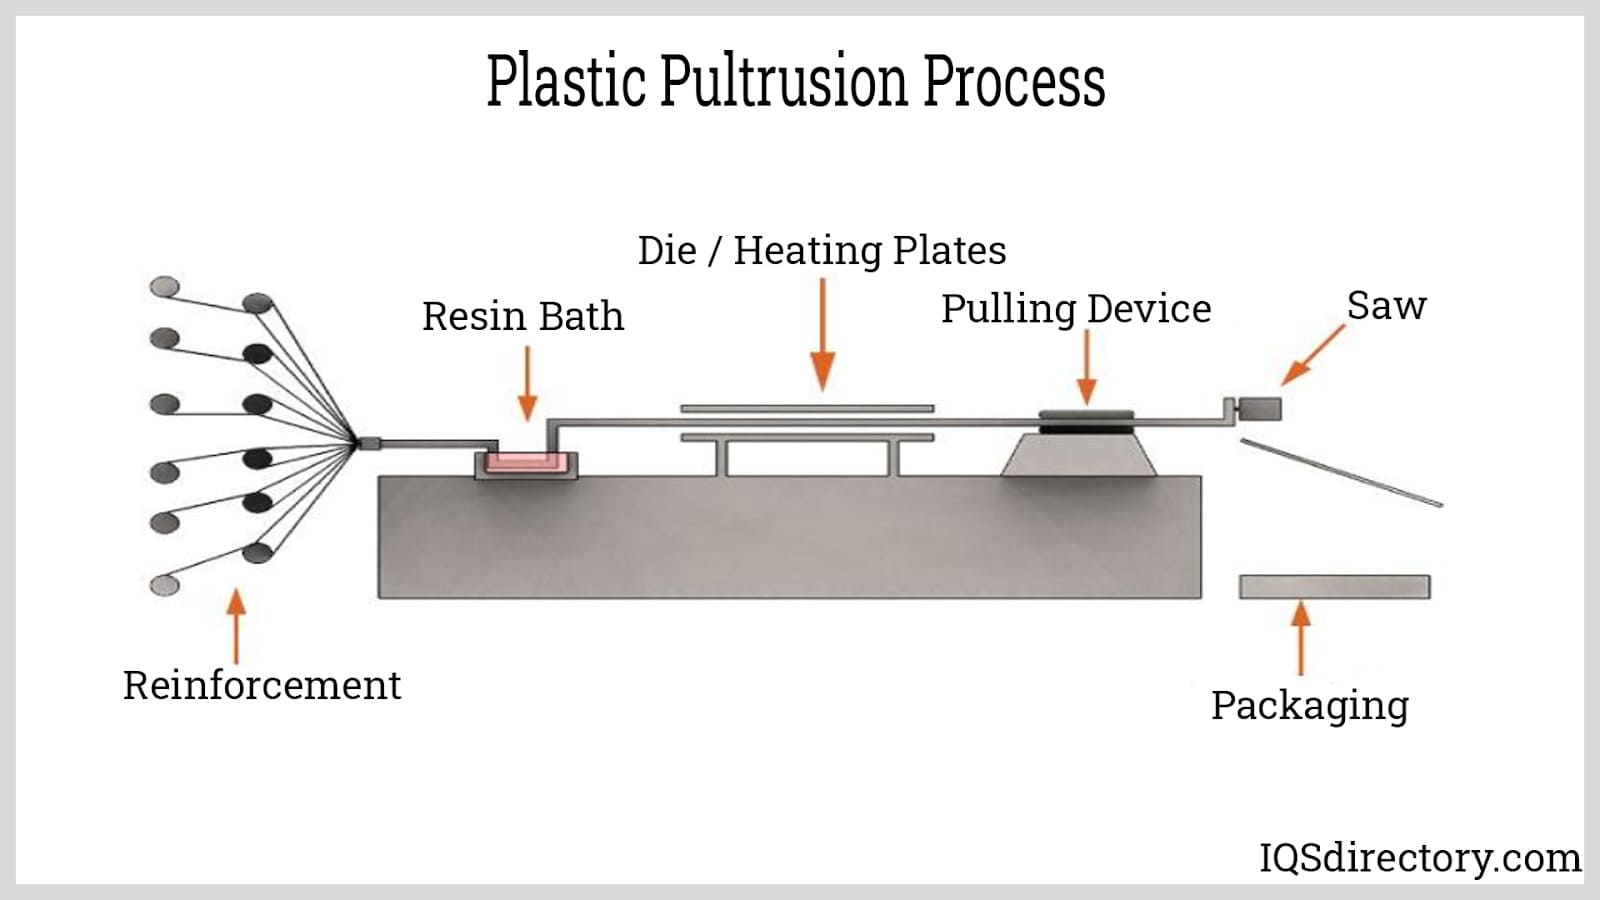 Plastic Pultrusion Process